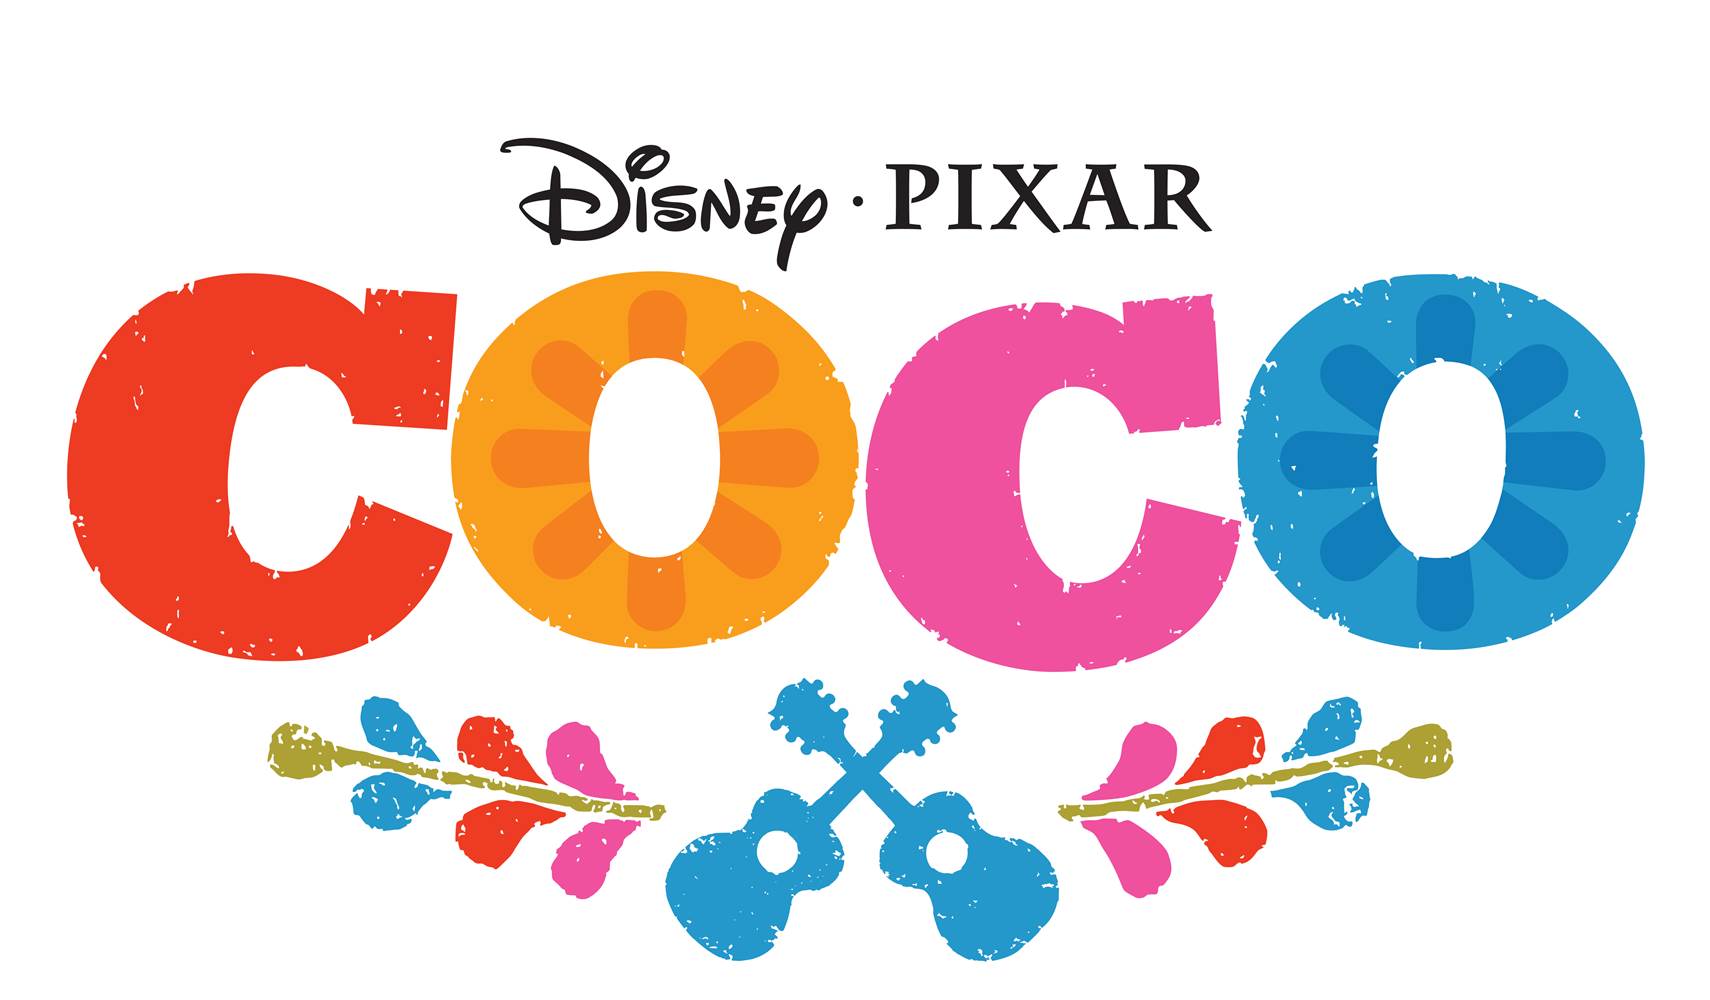 Coco Disney Pixar movie logo